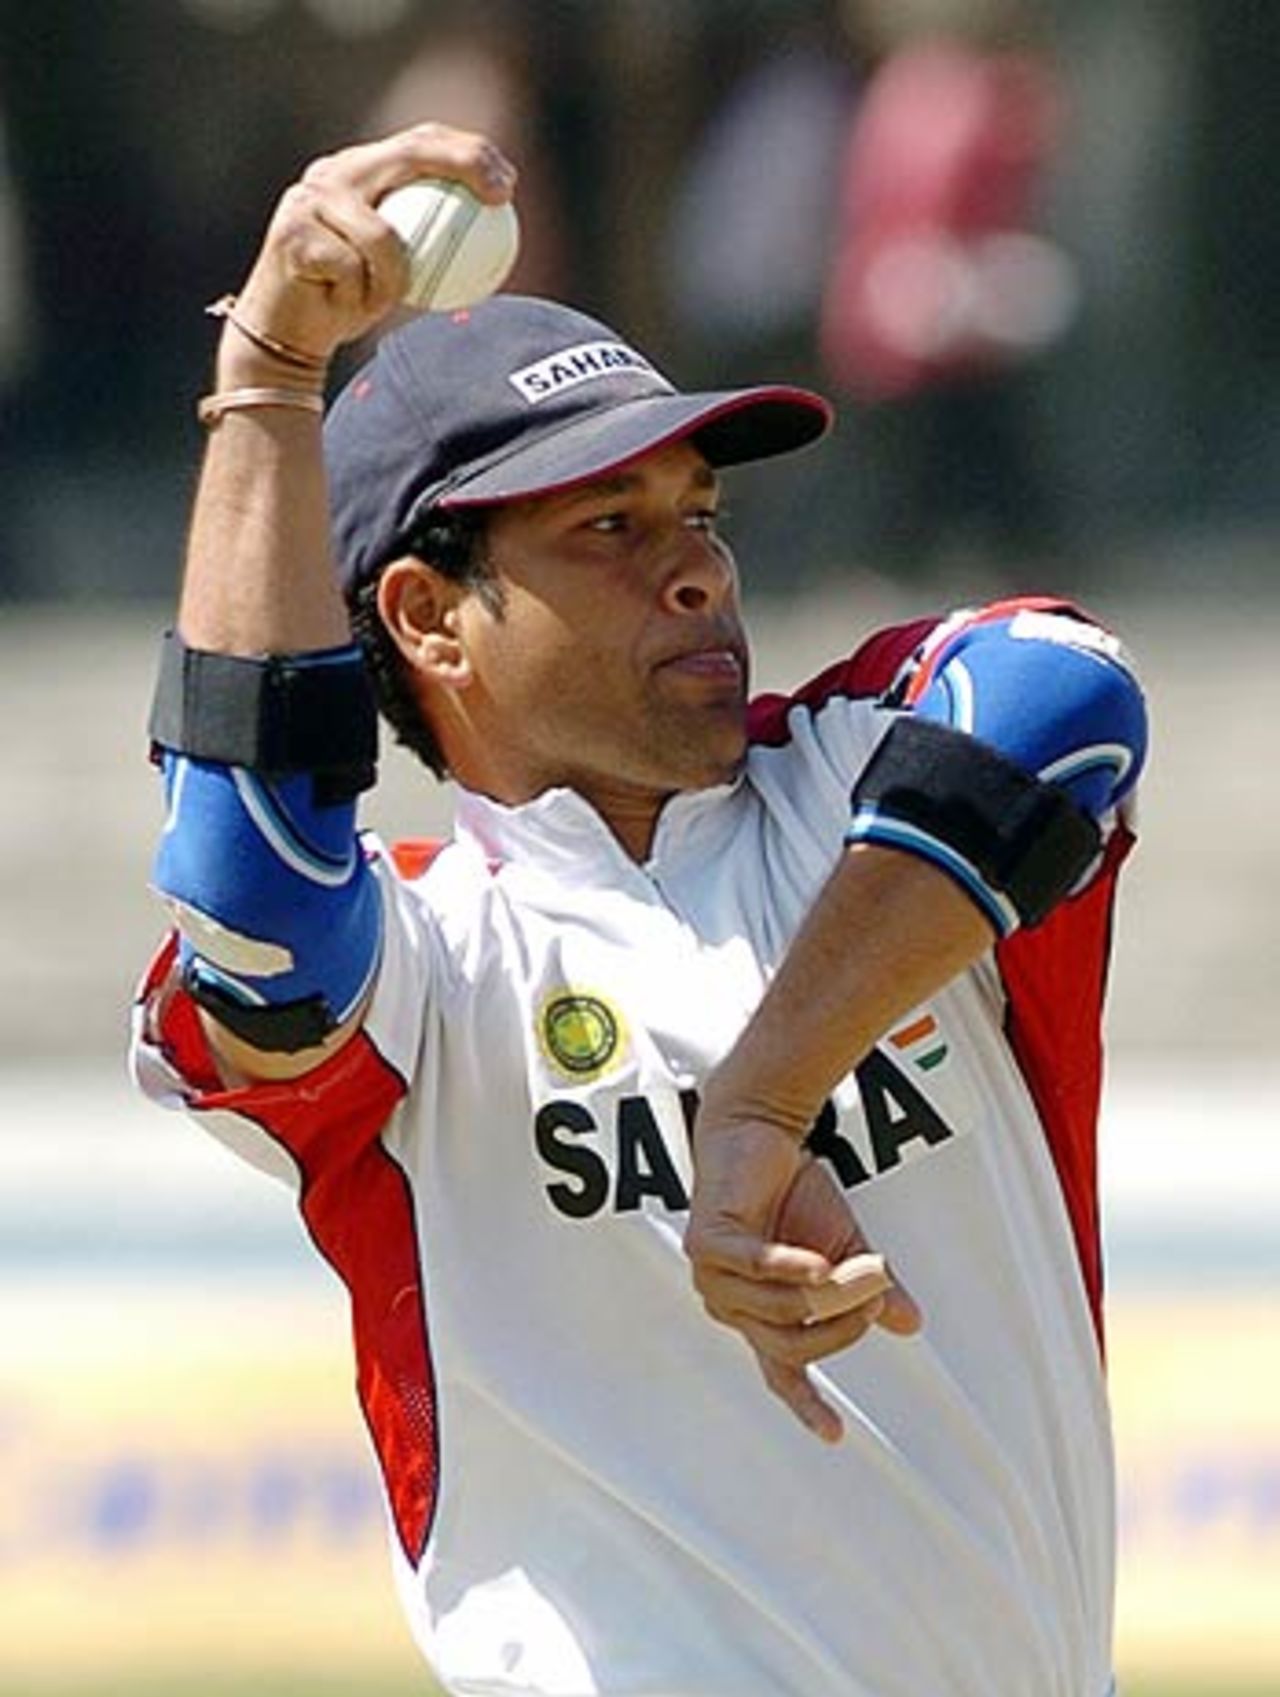 Sachin Tendulkar turns his arm over during a practice session ahead of the 1st ODI against South Africa, Rajiv Gandhi International Stadium, Uppal, Hyderabad, November 15, 2005